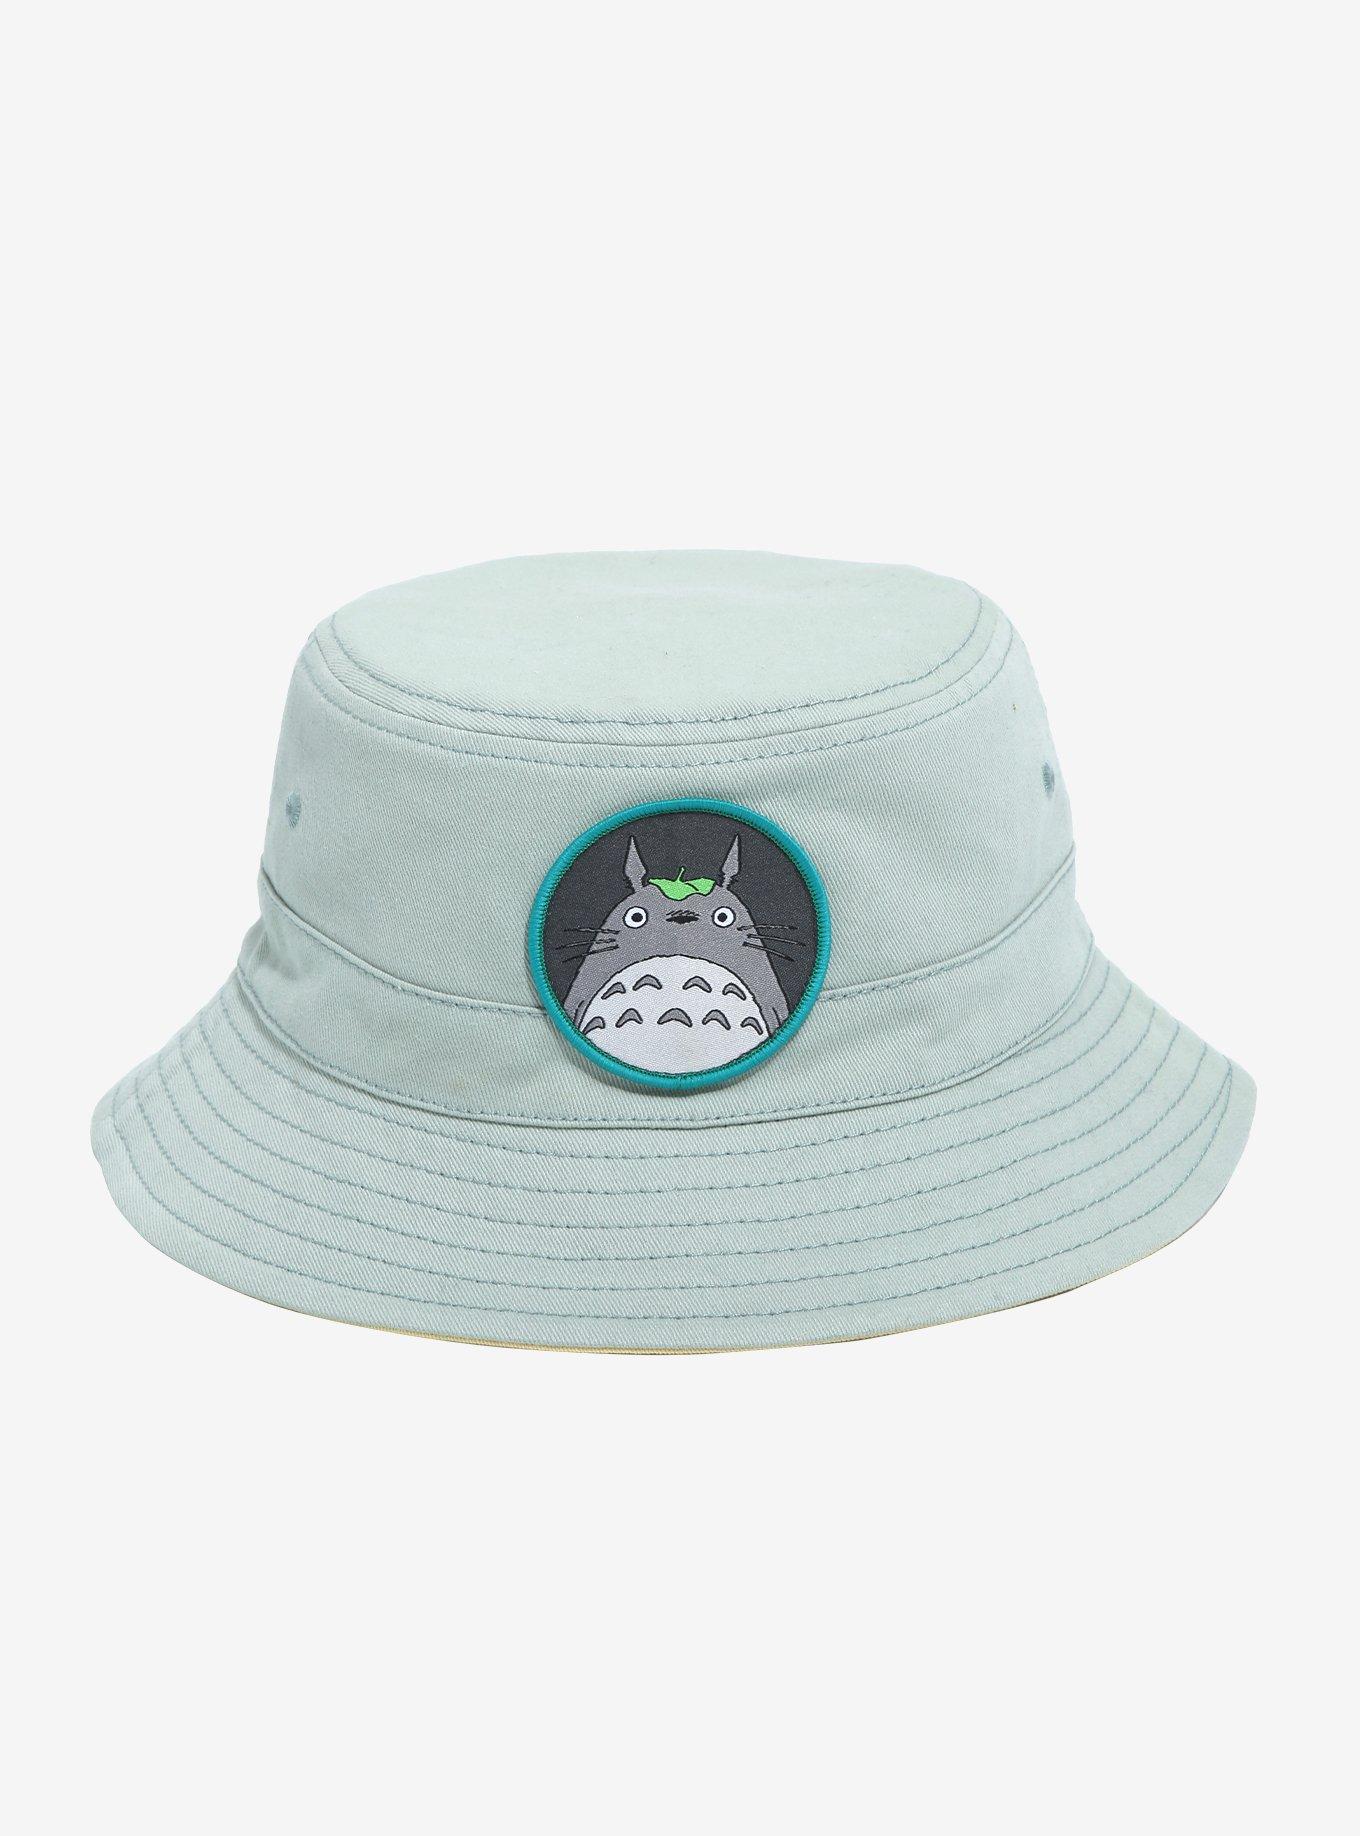 Studio Ghibli My Neighbor Totoro Catbus & Totoro Reversible Bucket Hat - BoxLunch Exclusive, , hi-res